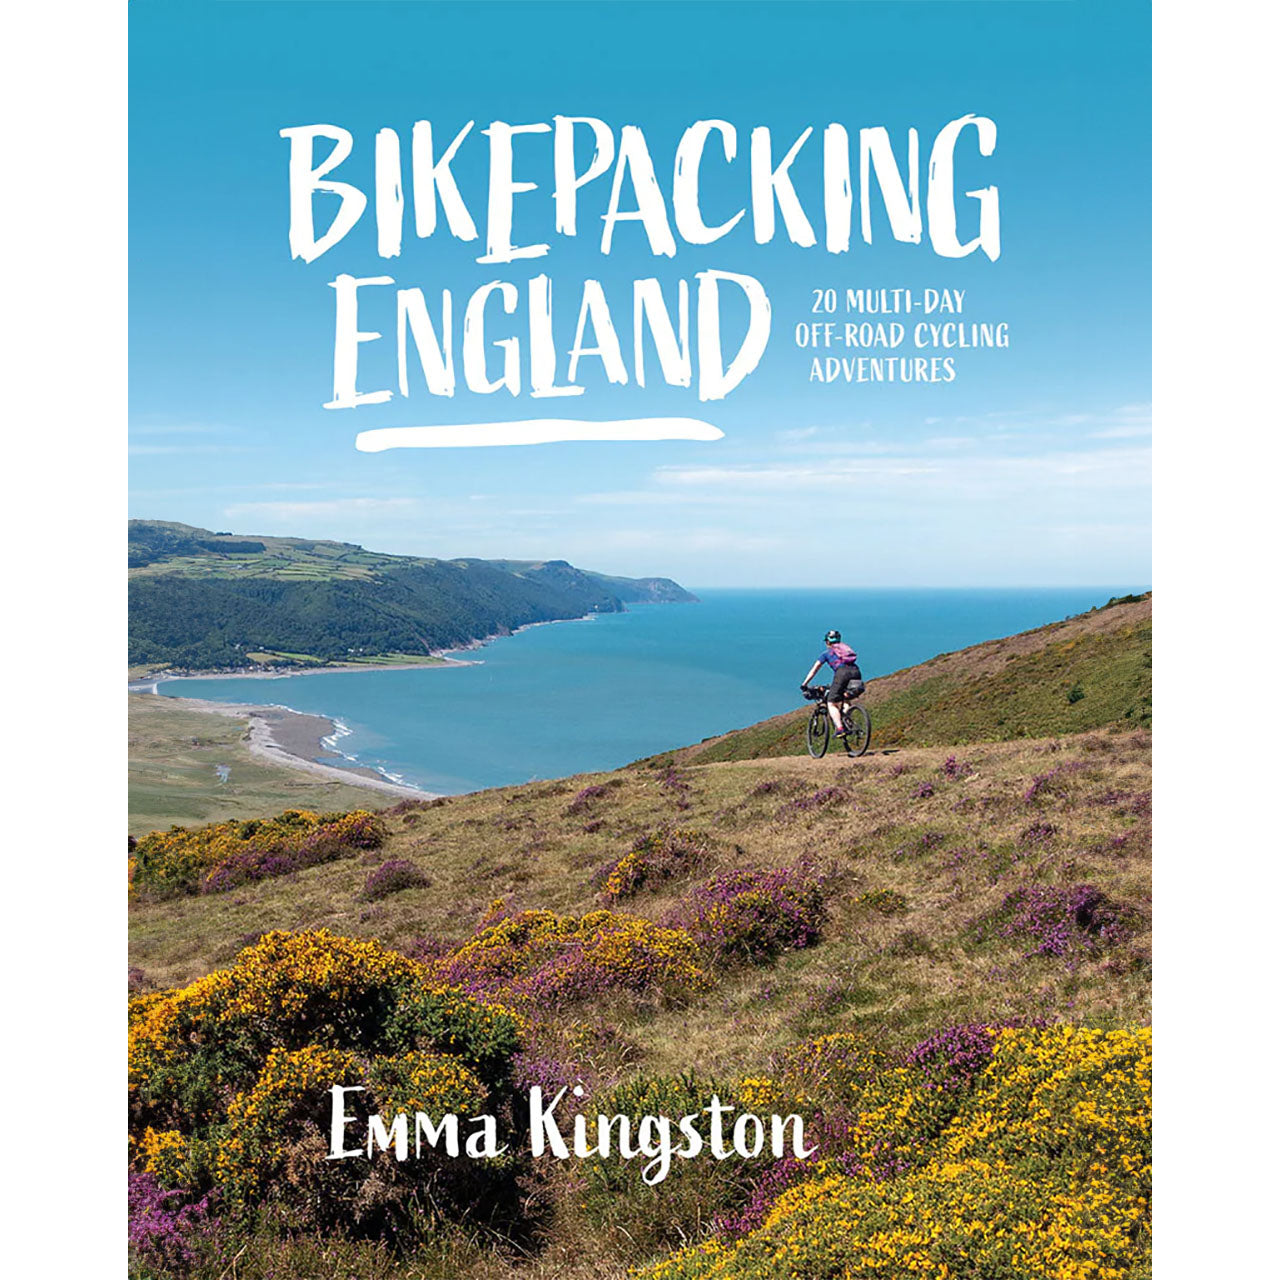 Bikepacking England by Emma Kingston